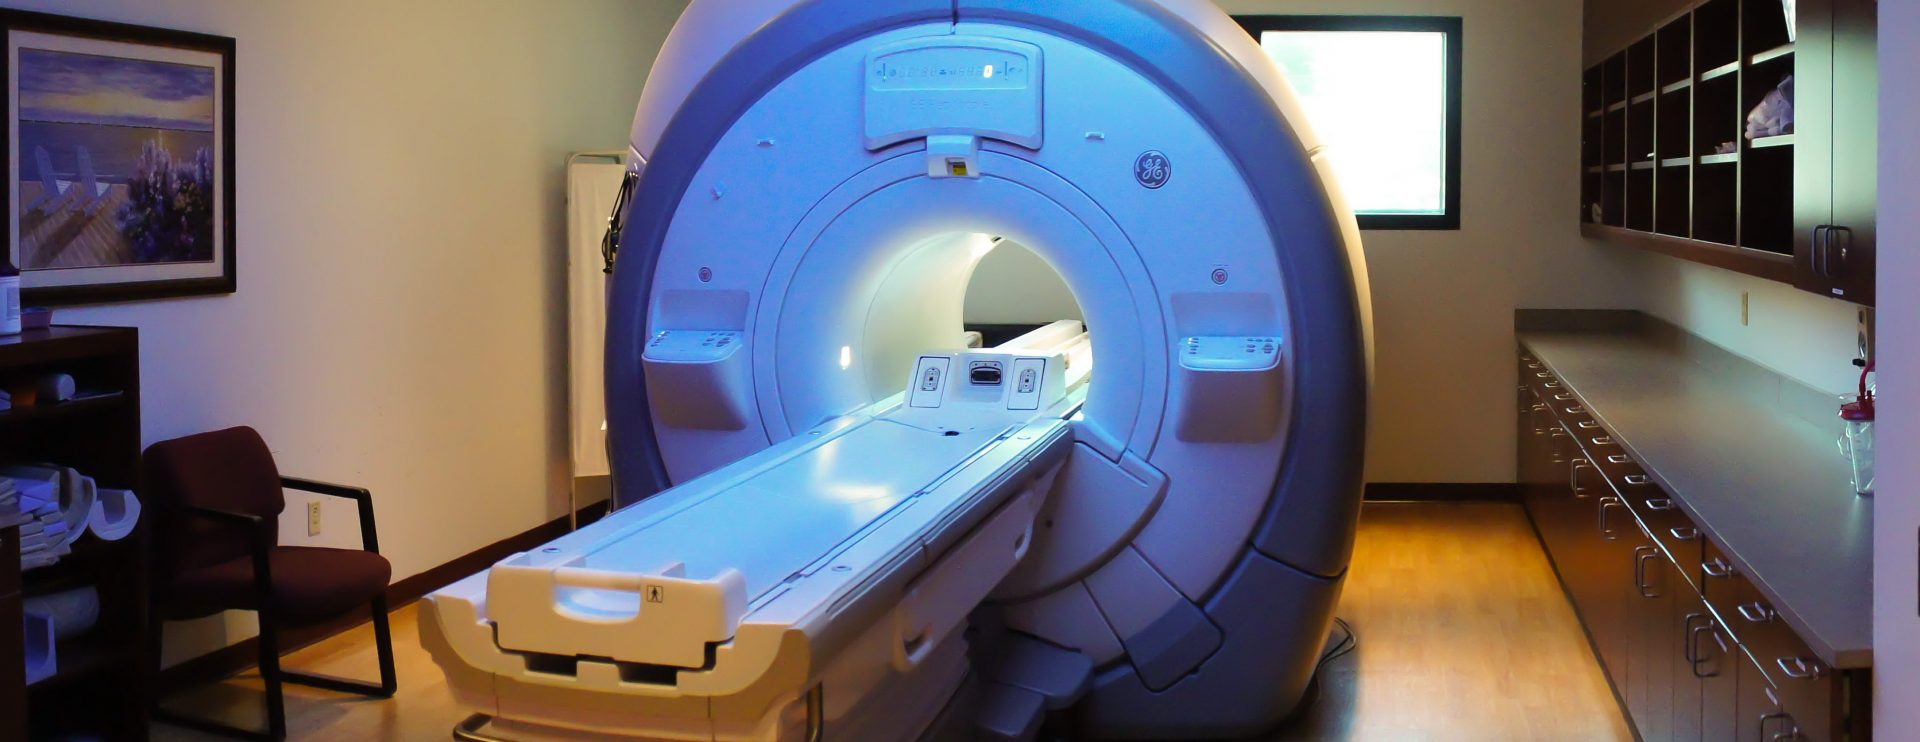 MRI Thoracic Spine Case Study